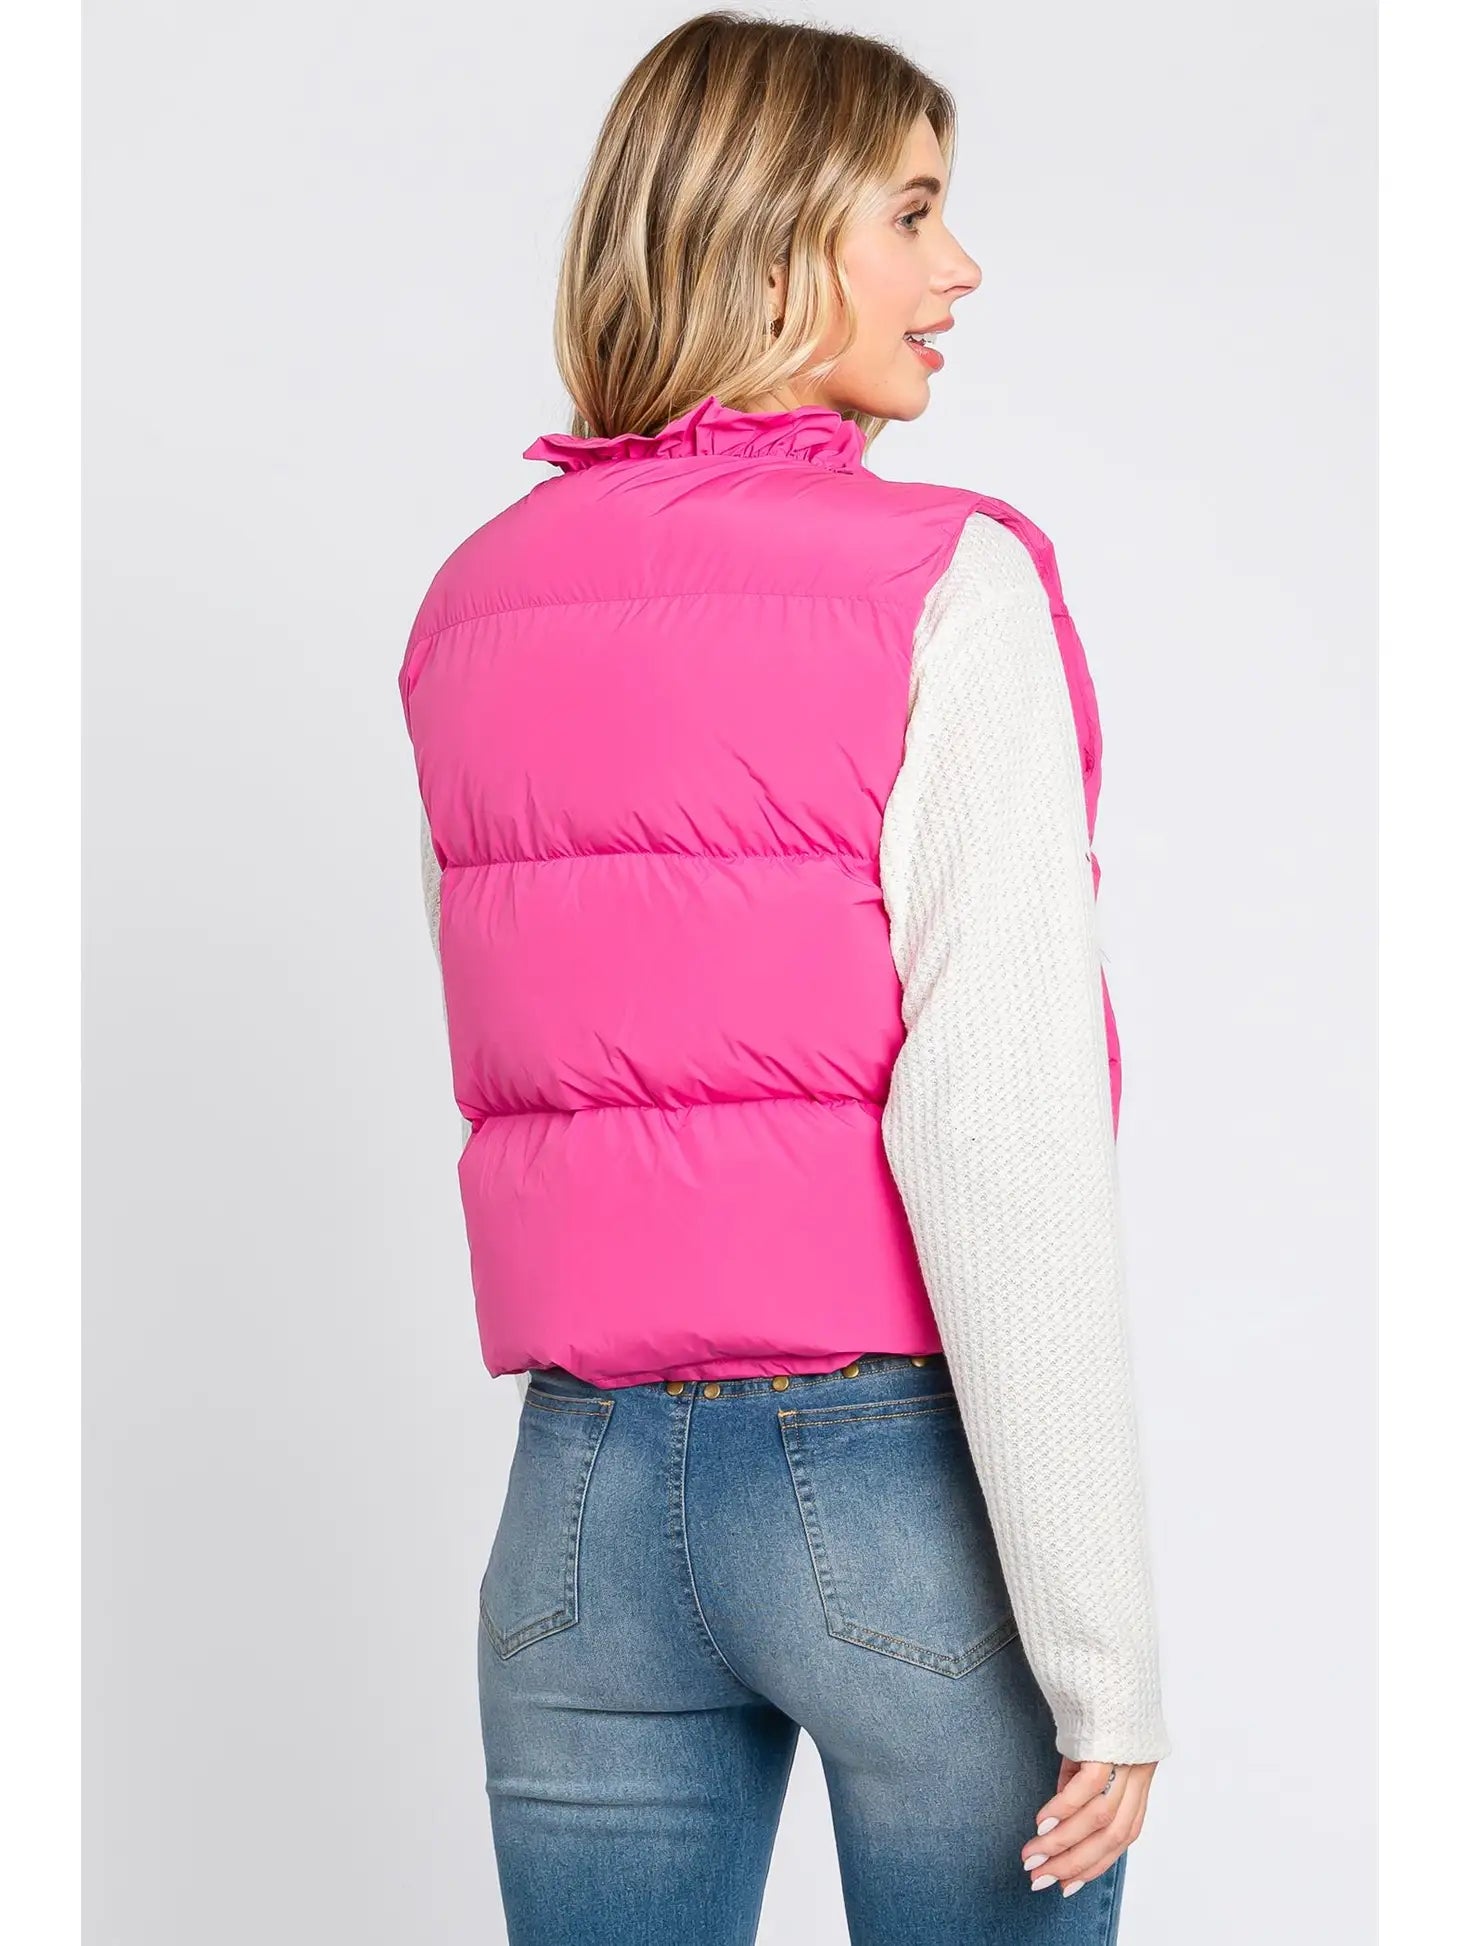 Ruffle Collar Puffer Vest - Pink (Plus Size)